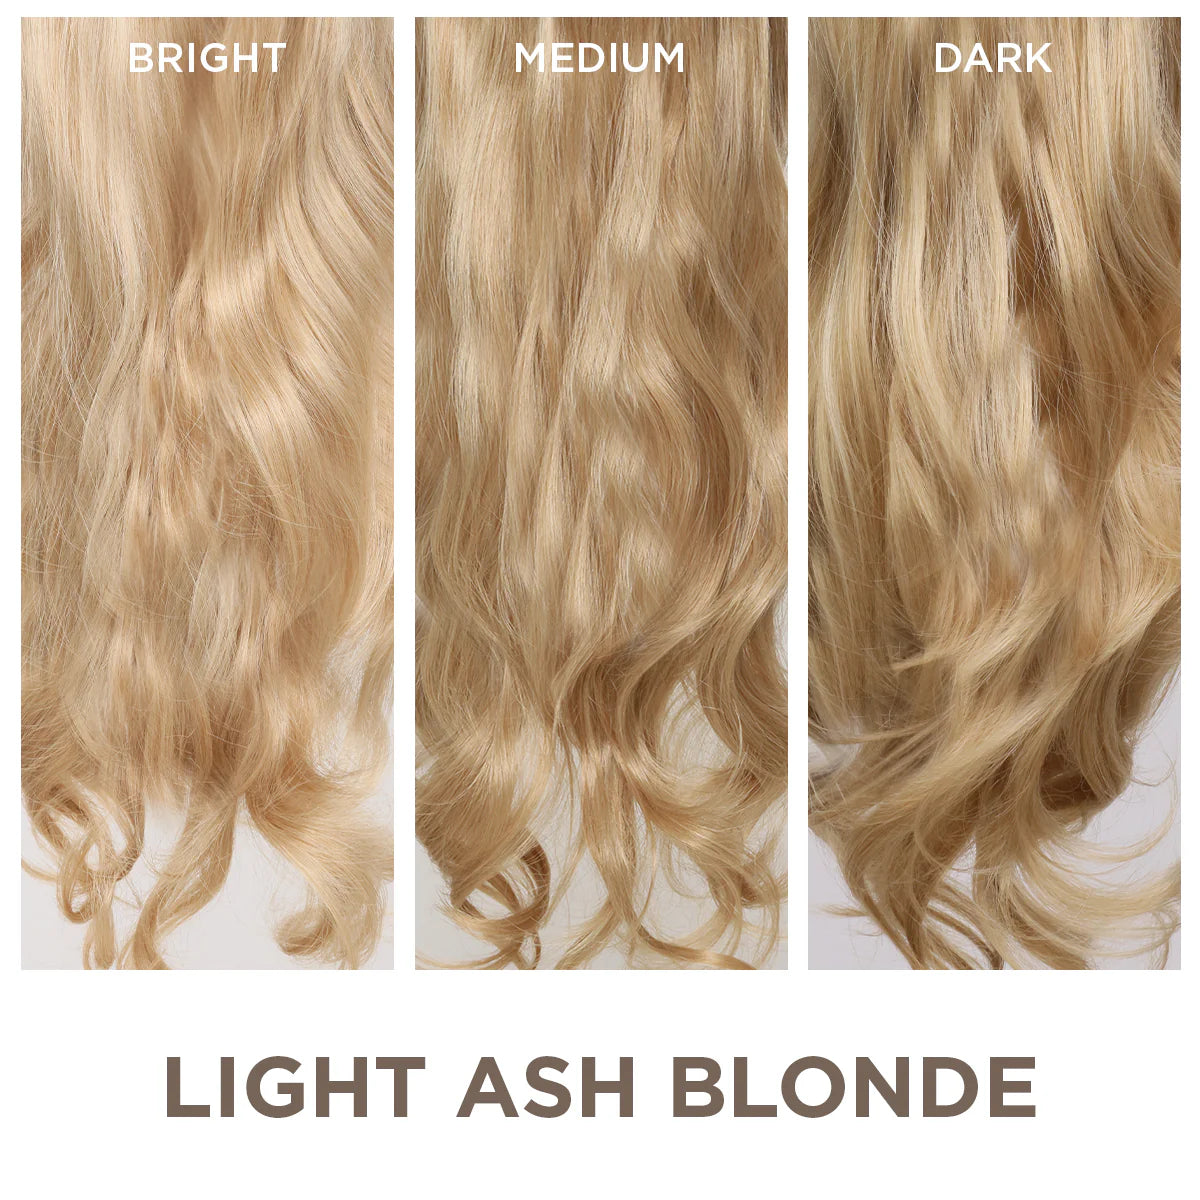 Light Ash Blonde + 1 FREE HALO